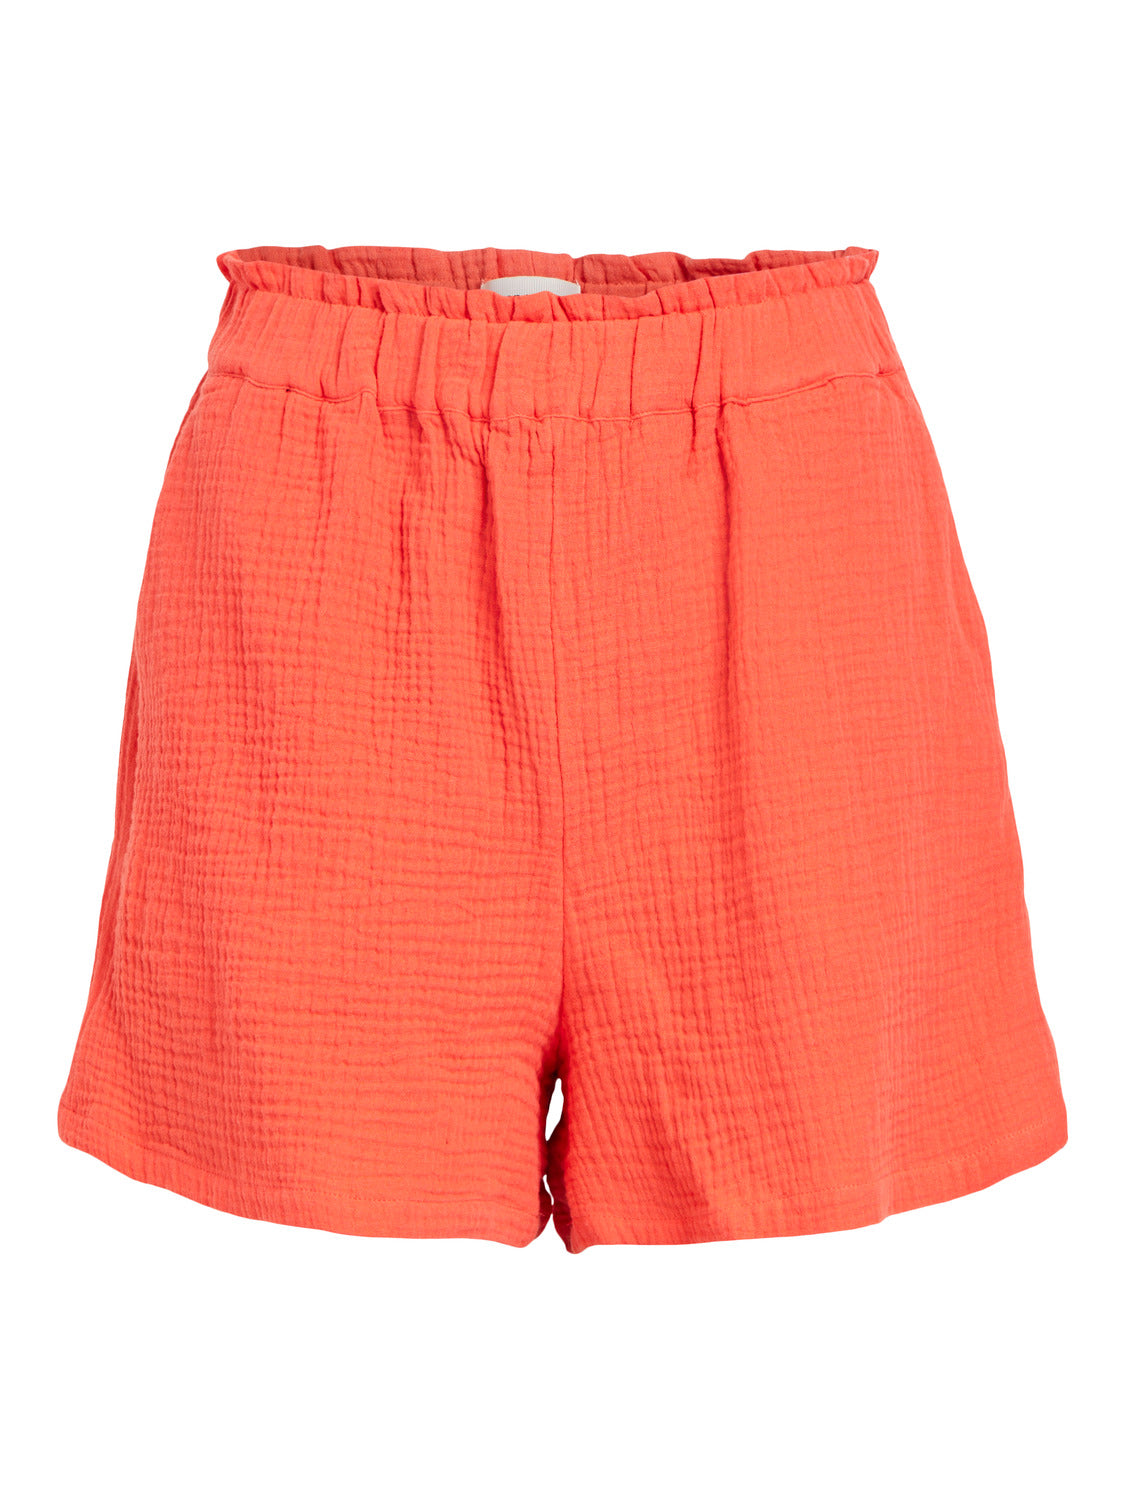 OBJCARINA Shorts - Hot Coral